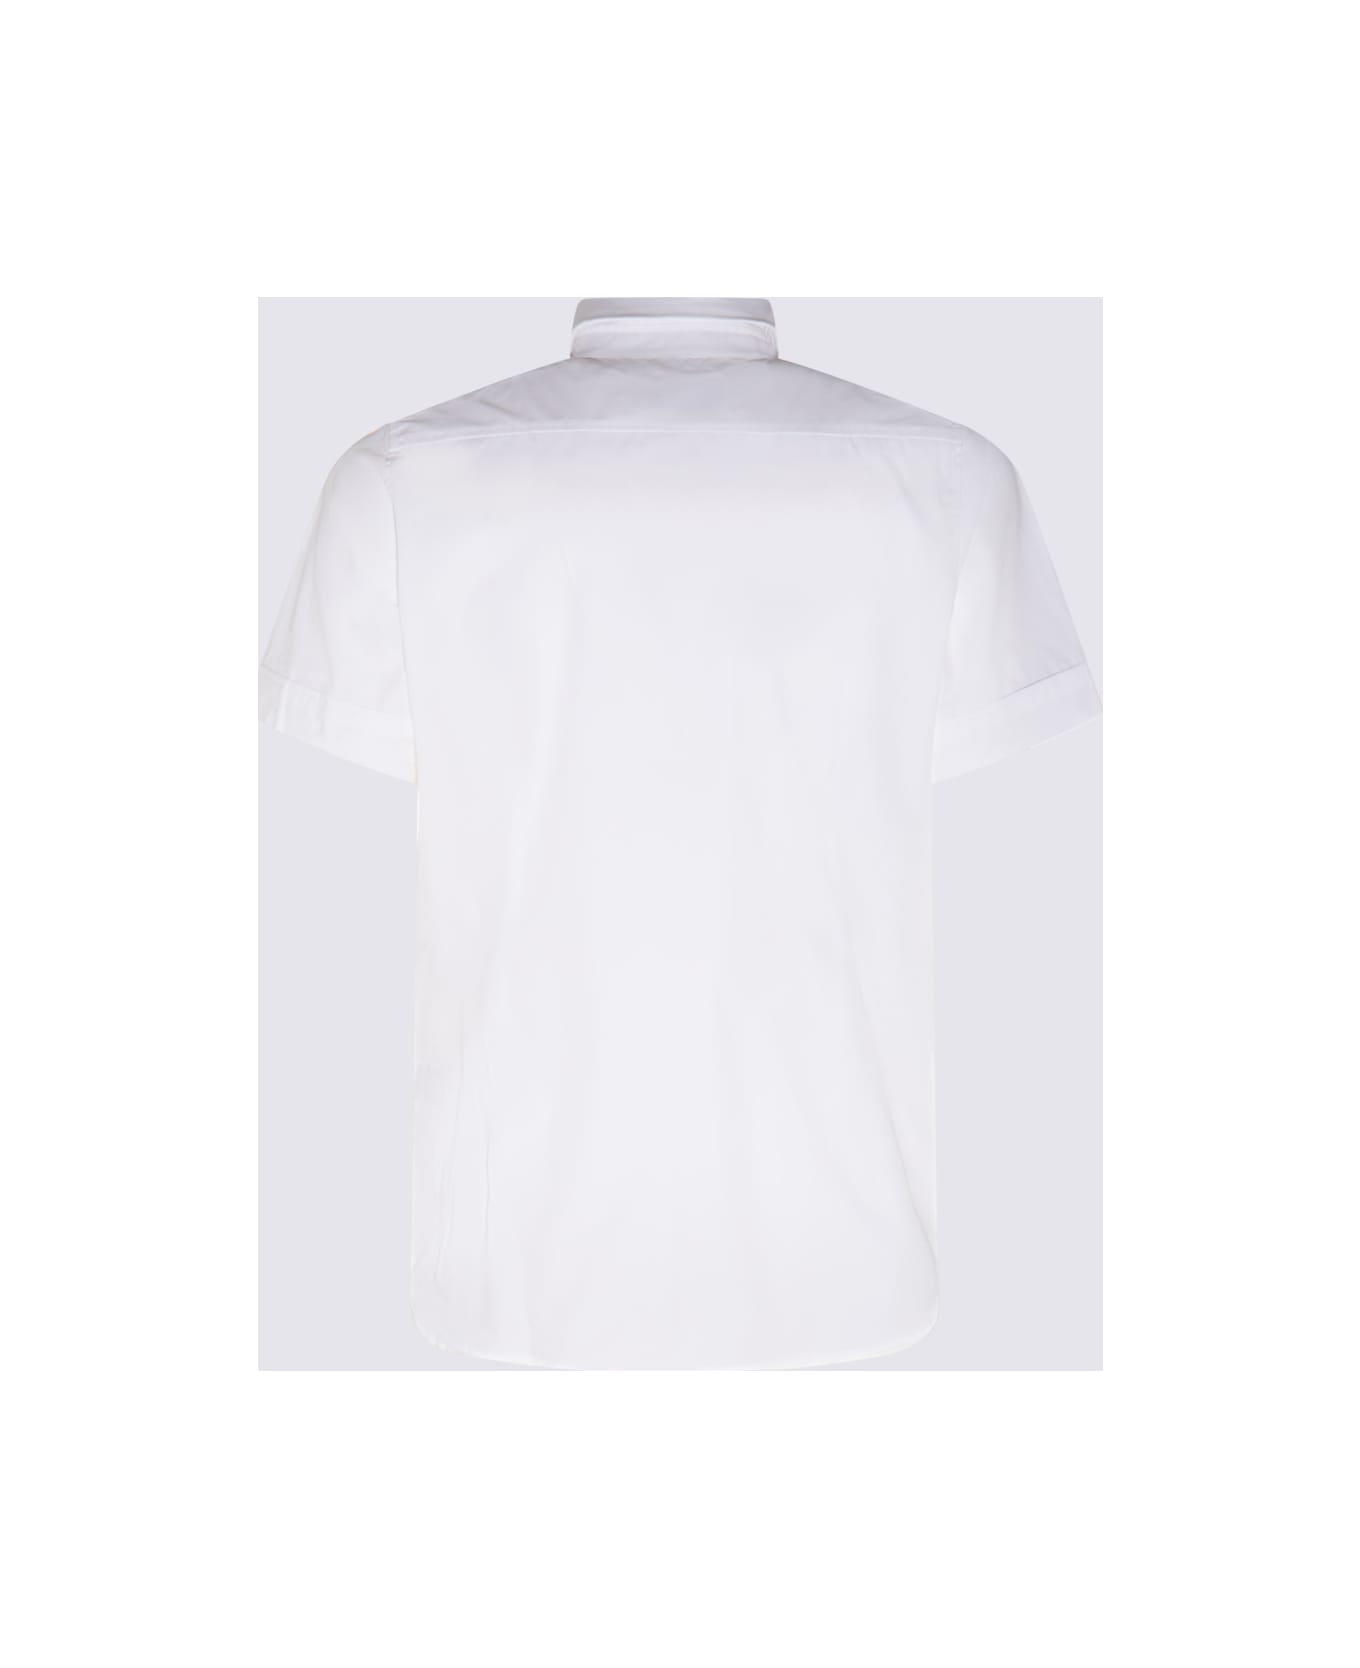 Vivienne Westwood White Cotton Shirt - White